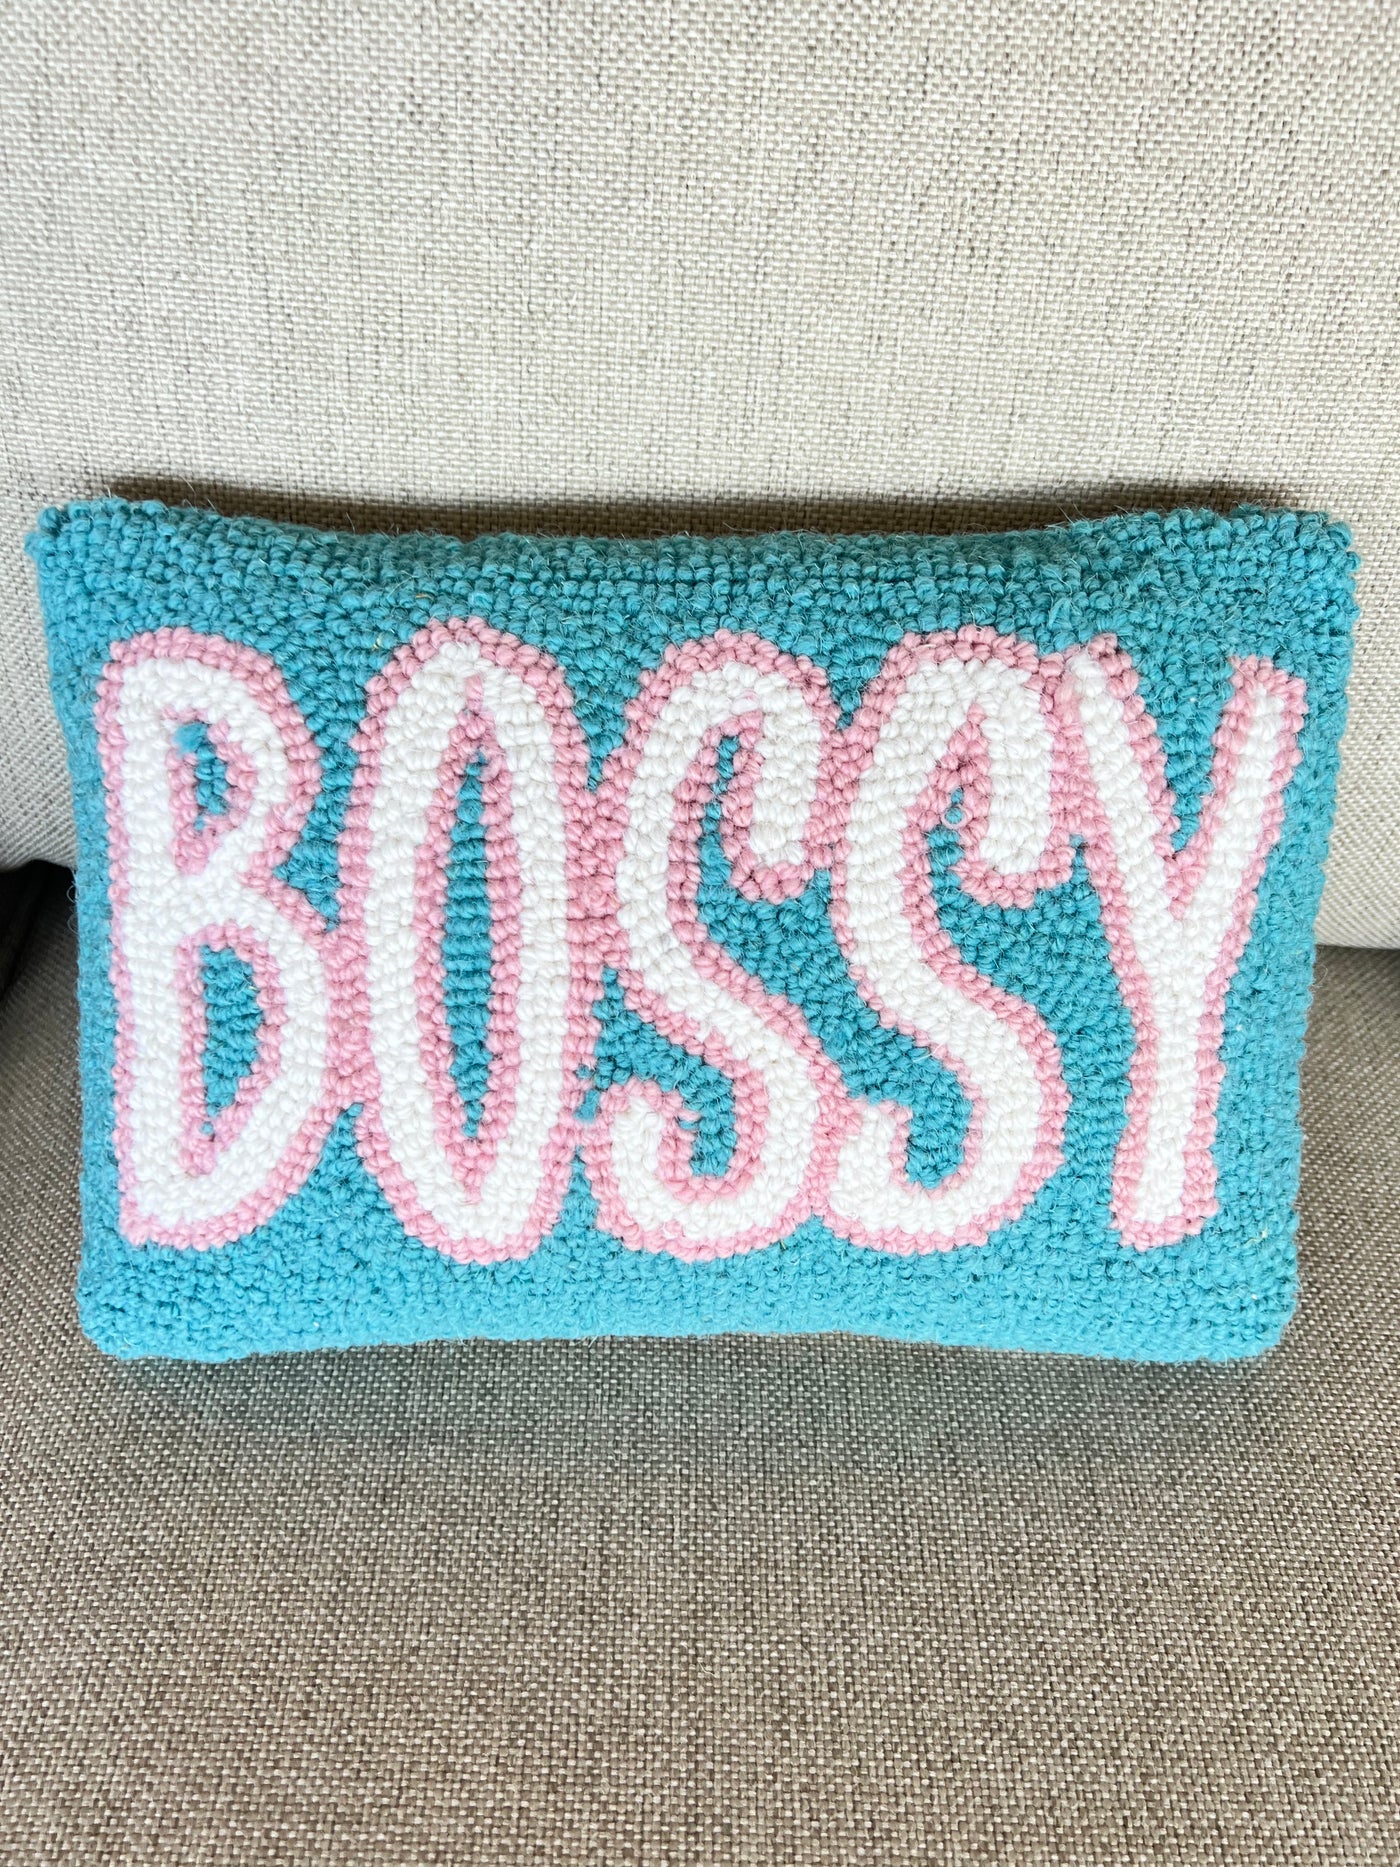 Bossy Hook Pillow